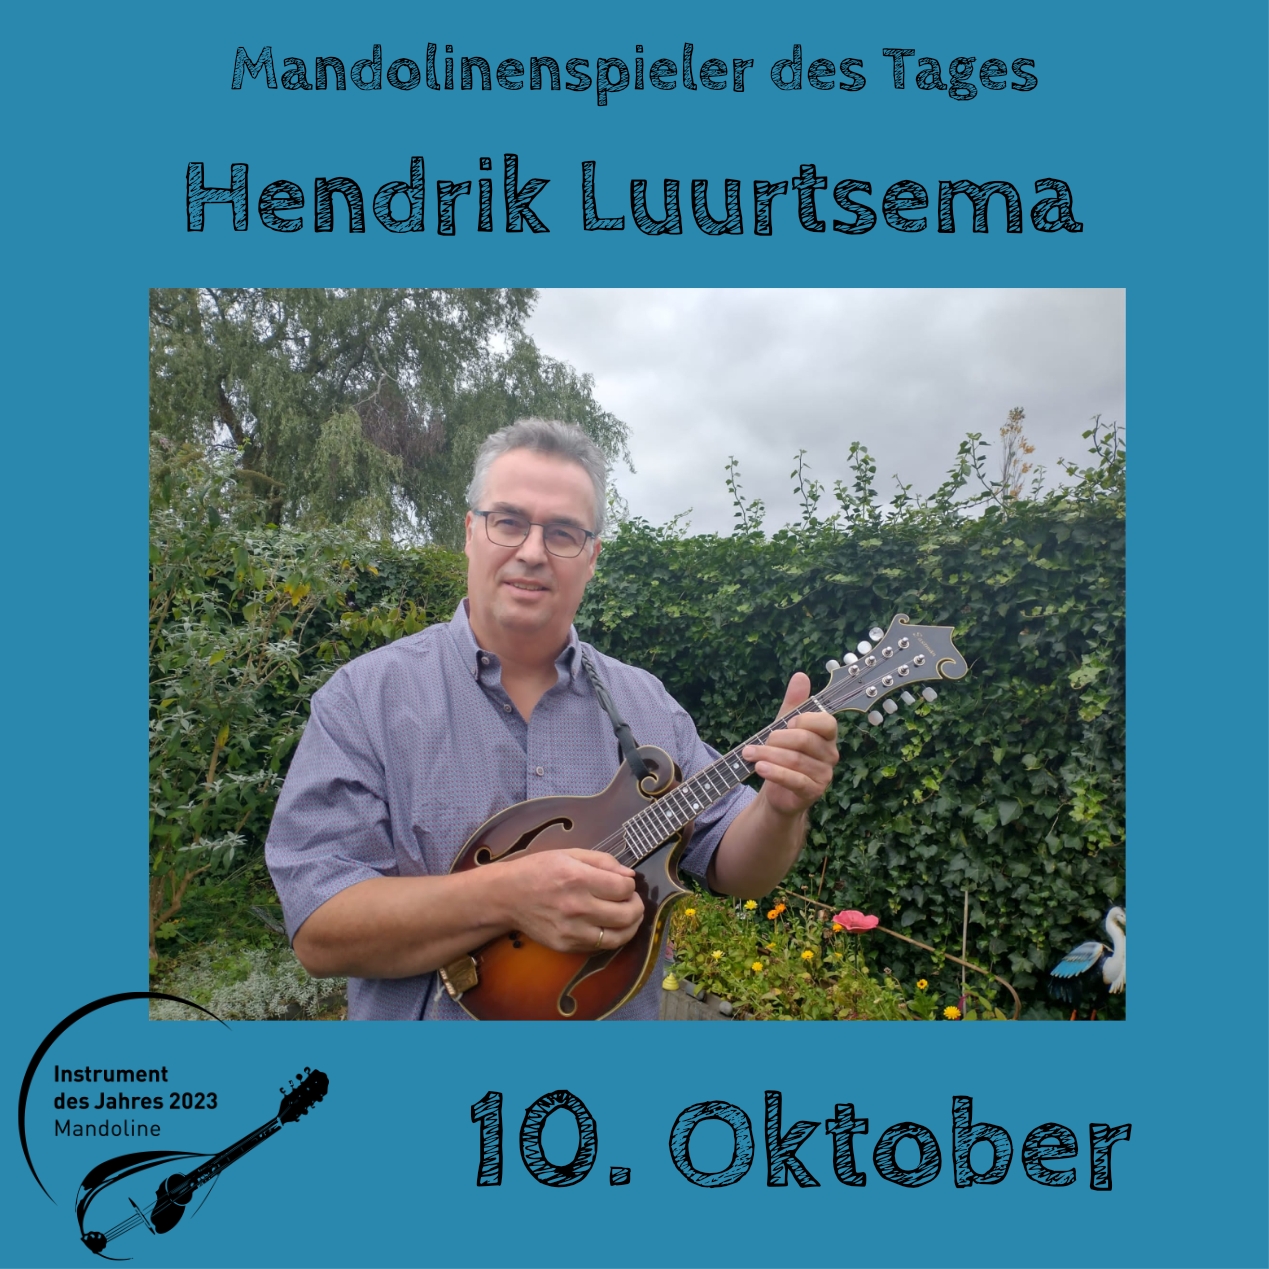 You are currently viewing 10. Oktober – Hendrik Luurtsema